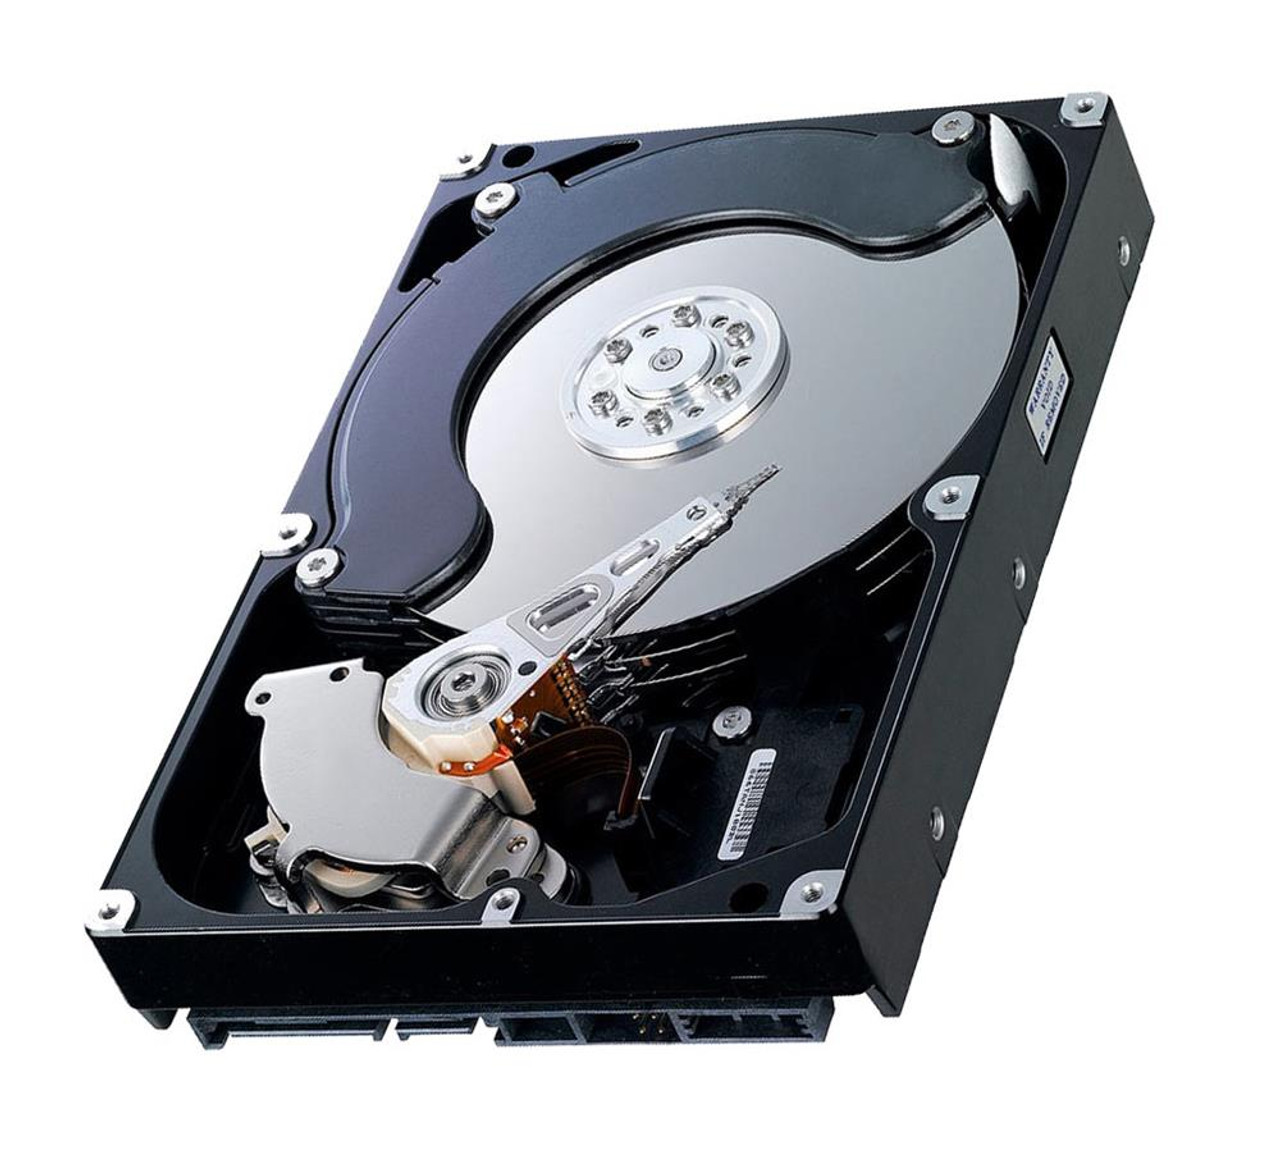 99-004211-001 - Western Digital Caviar 1.2GB 5200RPM ATA/IDE 128KB Cache 3.5-inch Hard Disk Drive